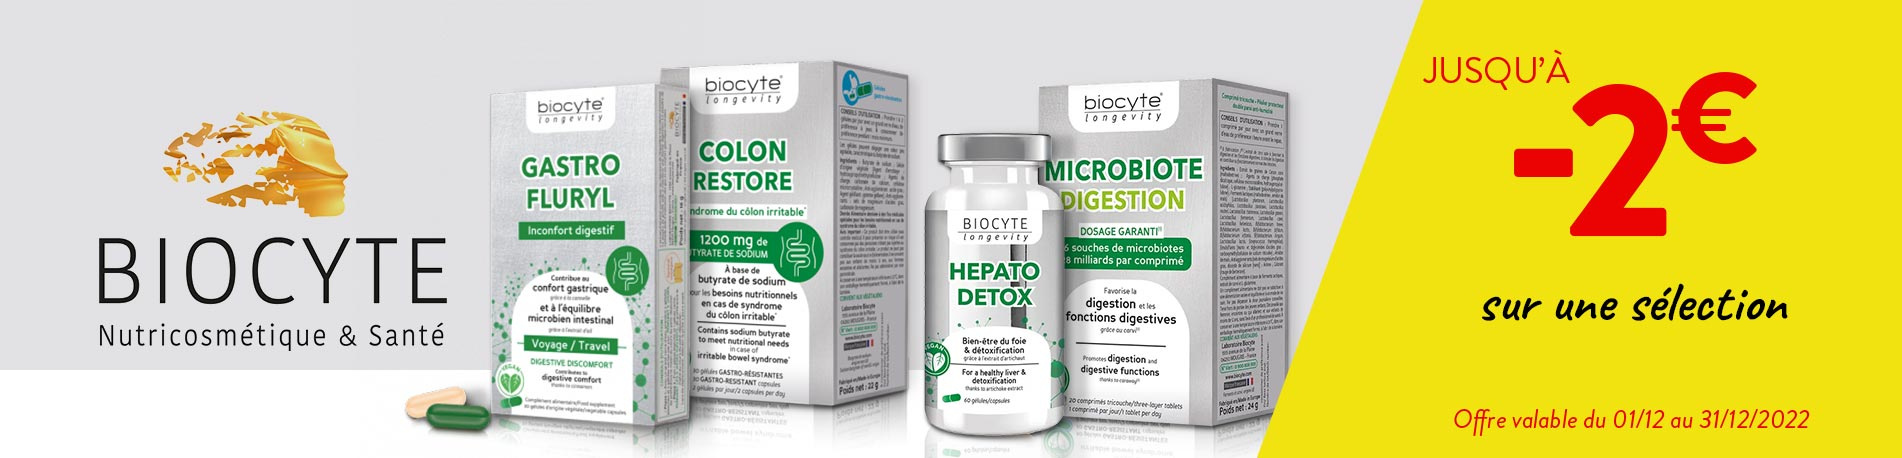 Promotion Biocyte